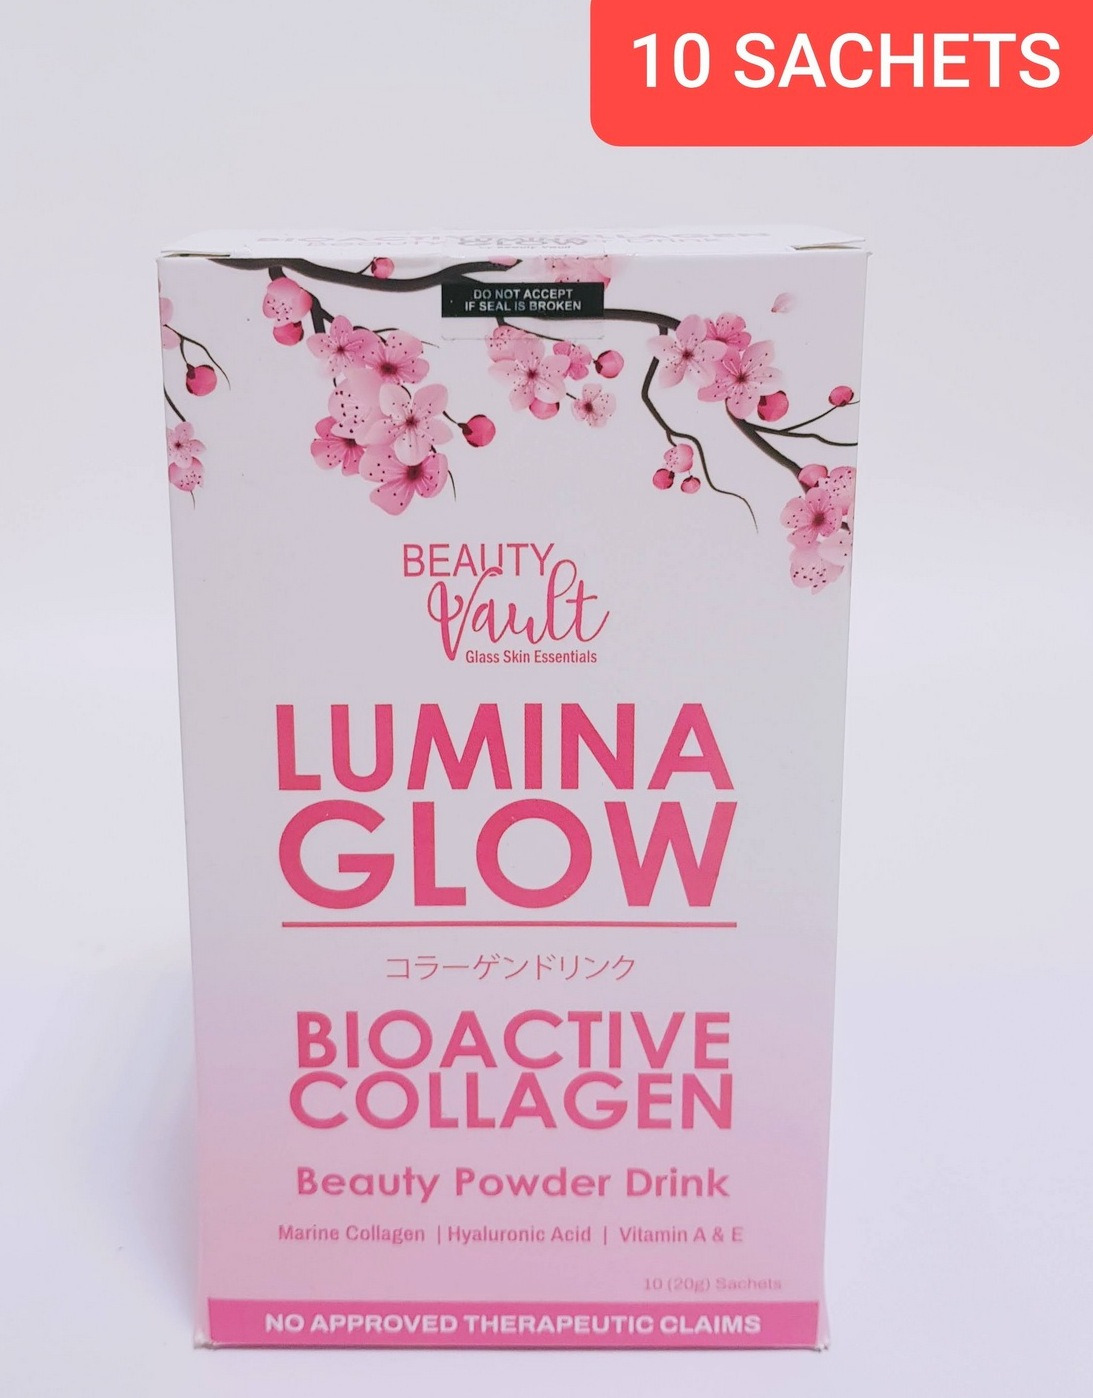 Beauty Vault Lumina Glow Bio Active Collagen Beauty Powder Drink 10 SACHETS (Cargo)